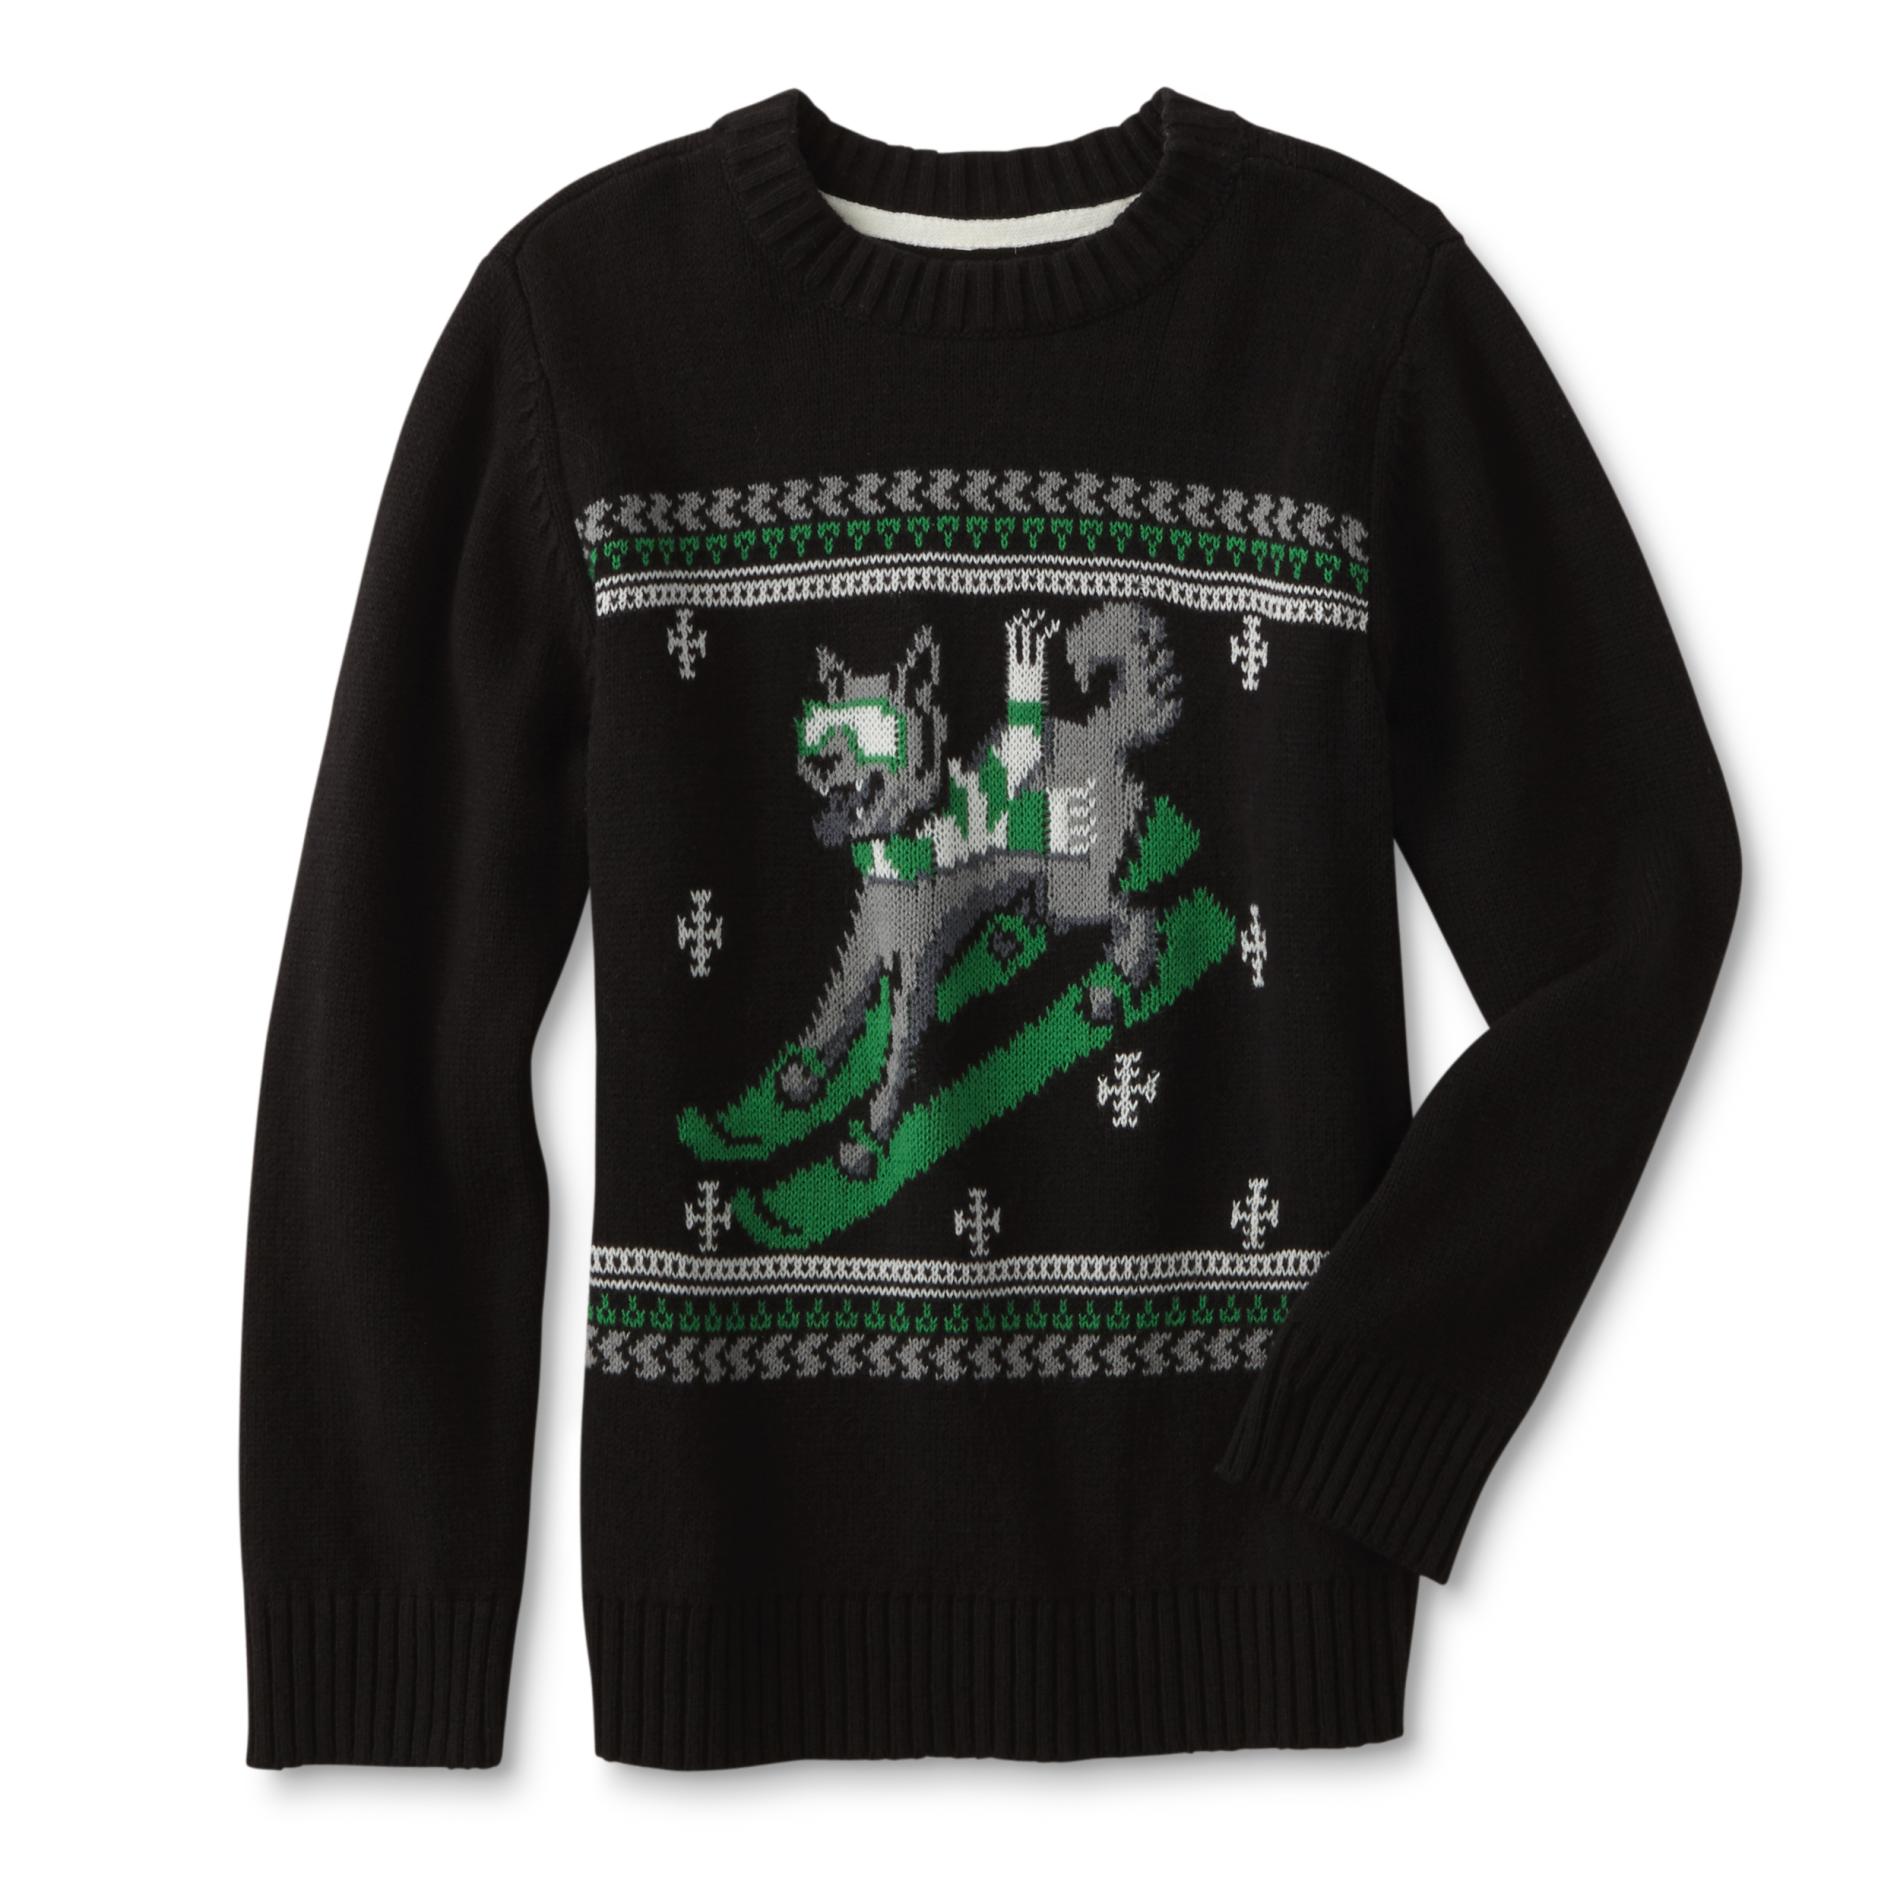 Toughskins Boys' Holiday Sweater - Skiing Wolf